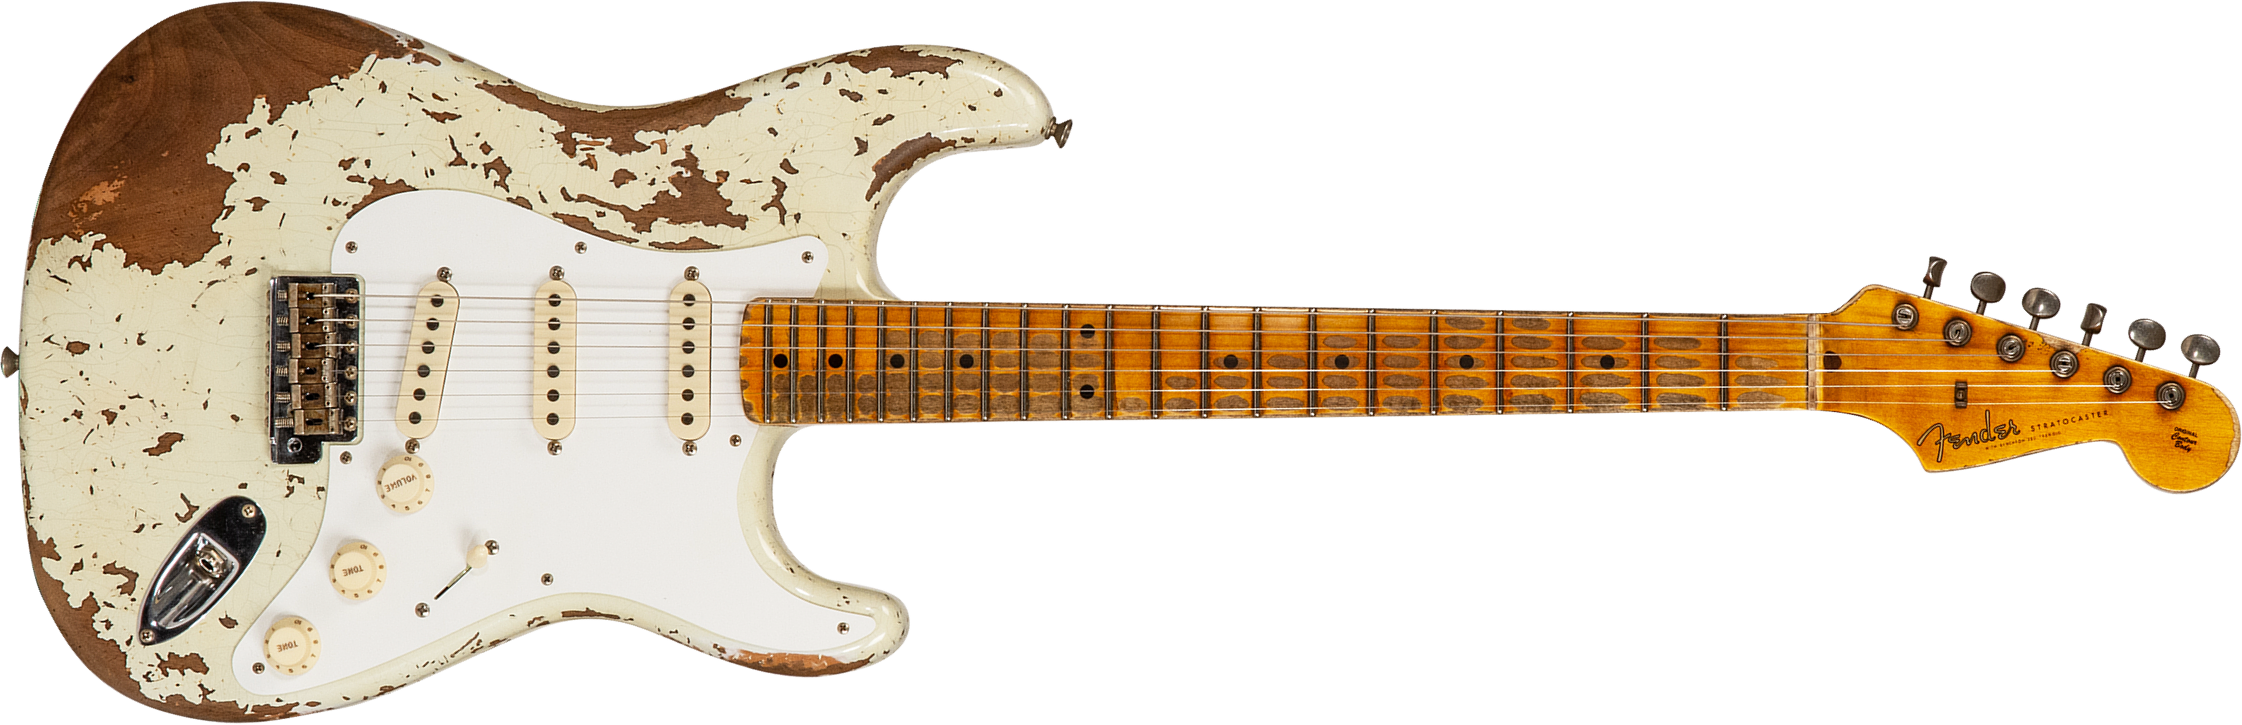 Fender Custom Shop Strat 1956 3s Trem Mn #cz568636 - Super Heavy Relic Aged India Ivory - Str shape electric guitar - Main picture